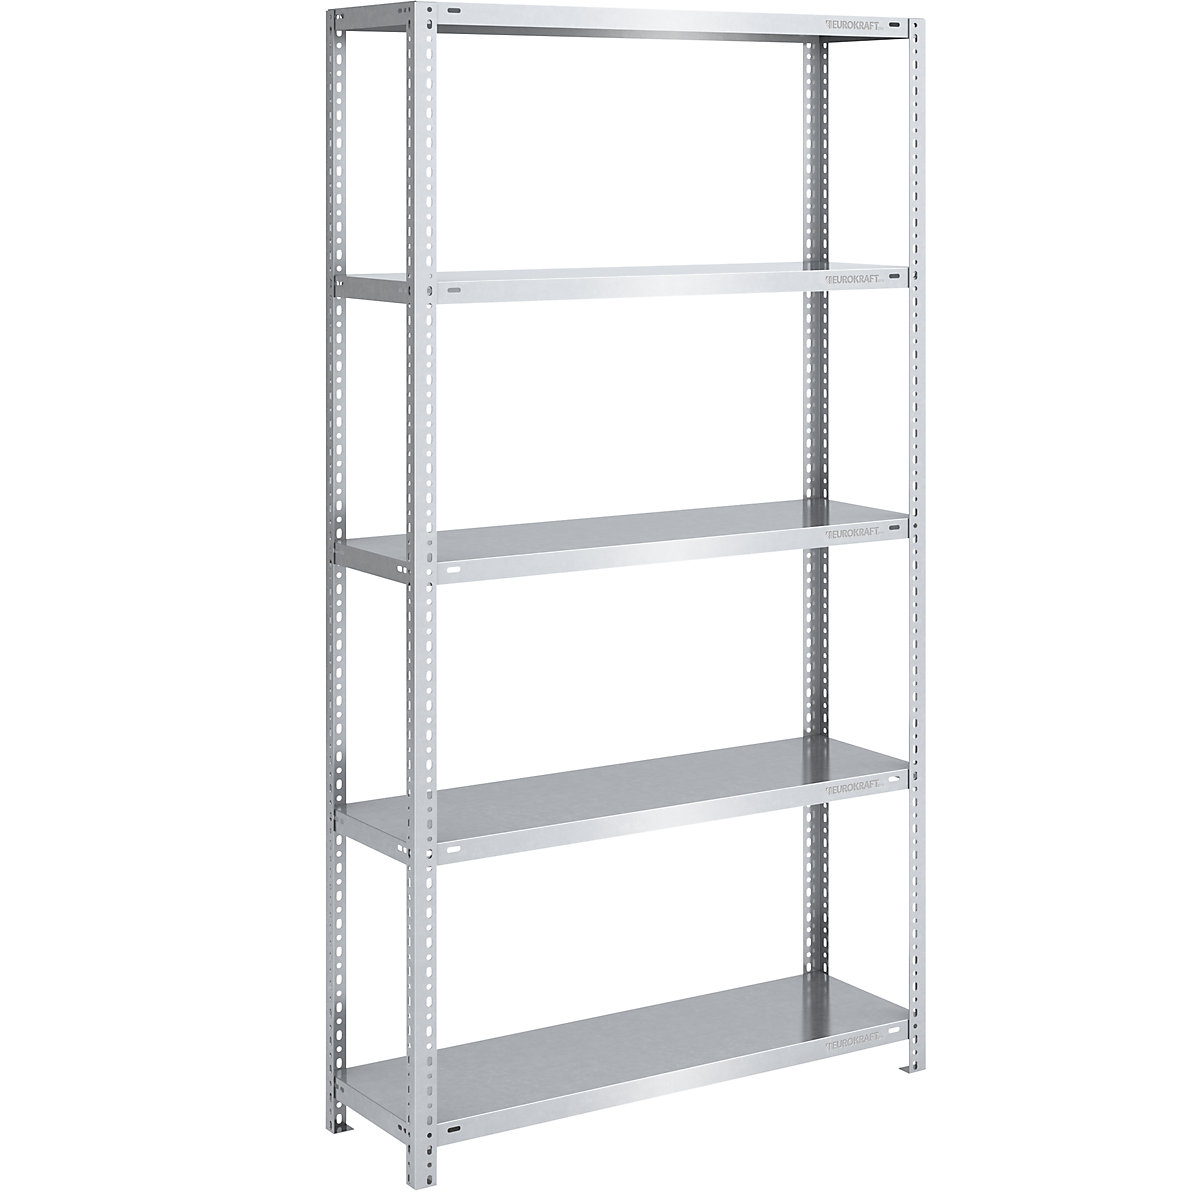 Bolt-together storage shelving, zinc plated, medium duty – eurokraft pro, shelf unit height 2000 mm, shelf width 1000 mm, depth 400 mm, standard shelf unit-11